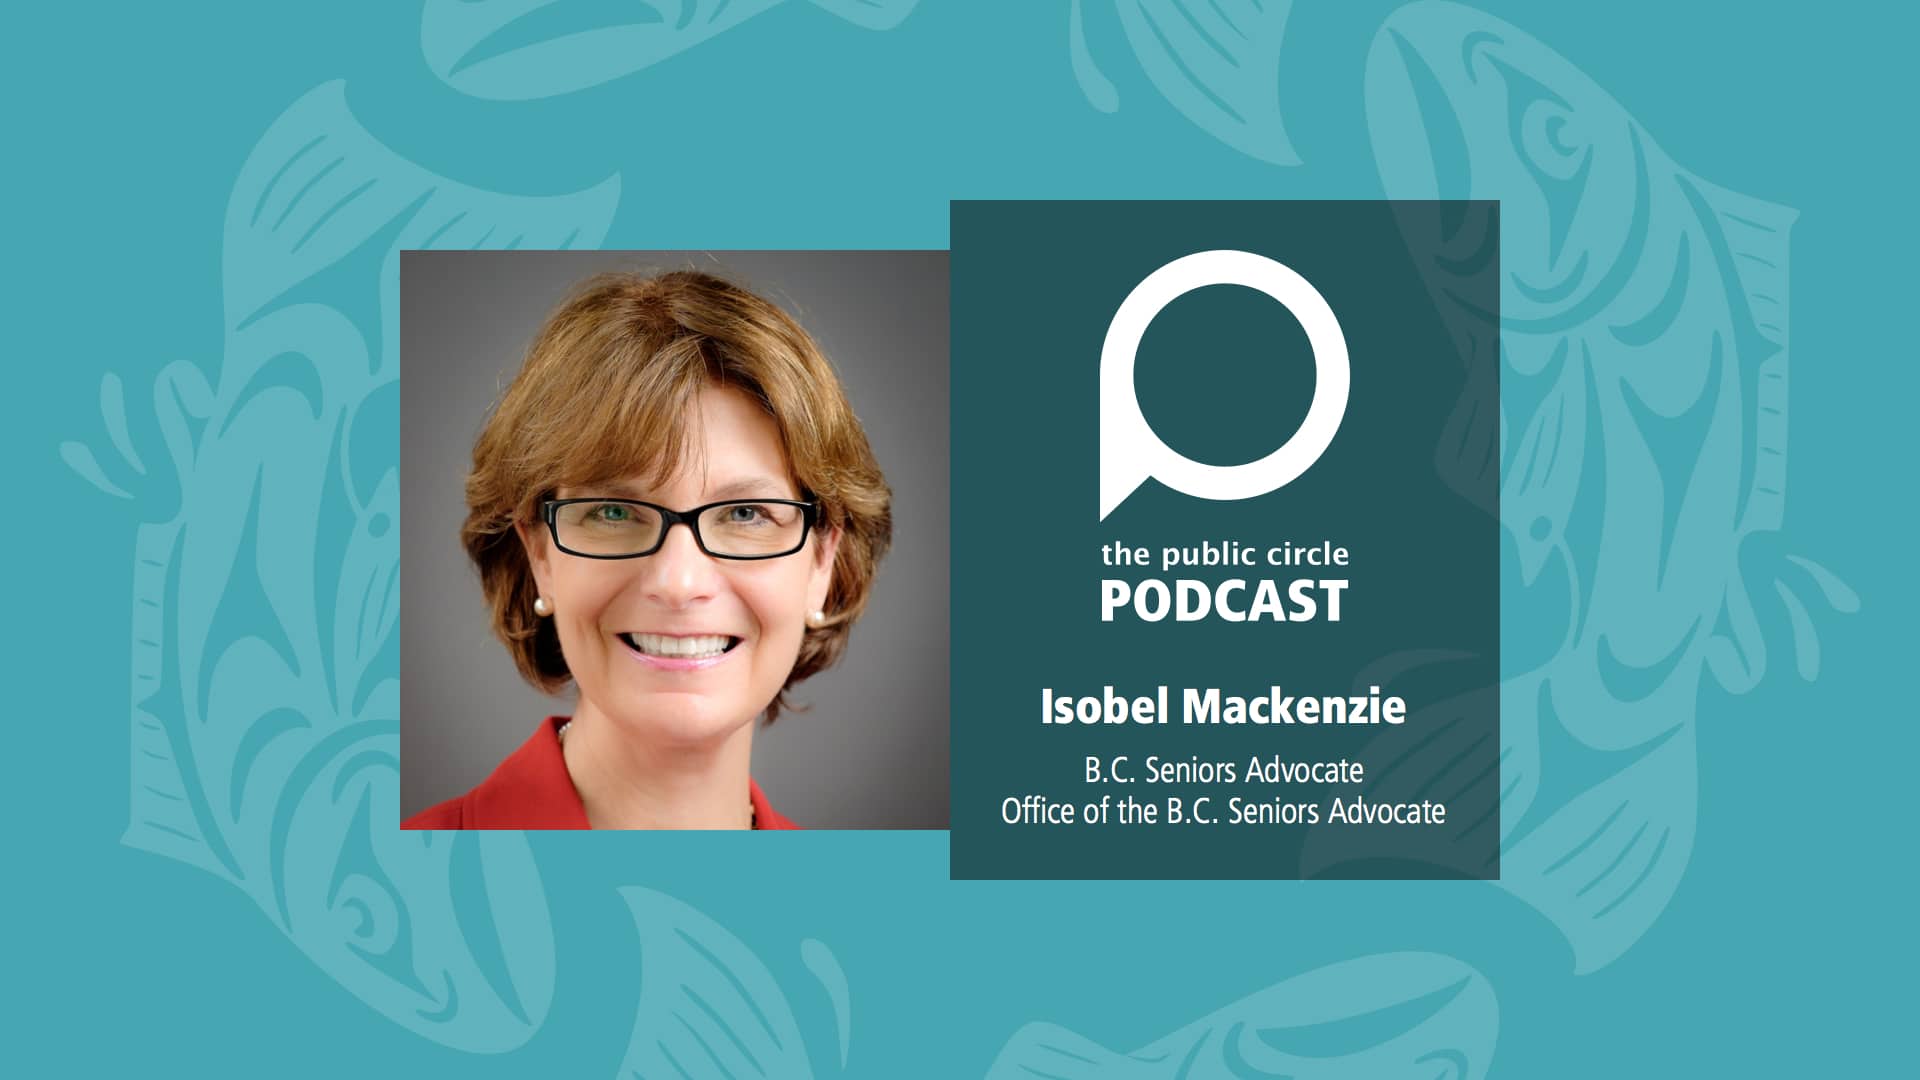 PODCAST: Isobel Mackenzie – B.C. Seniors Advocate